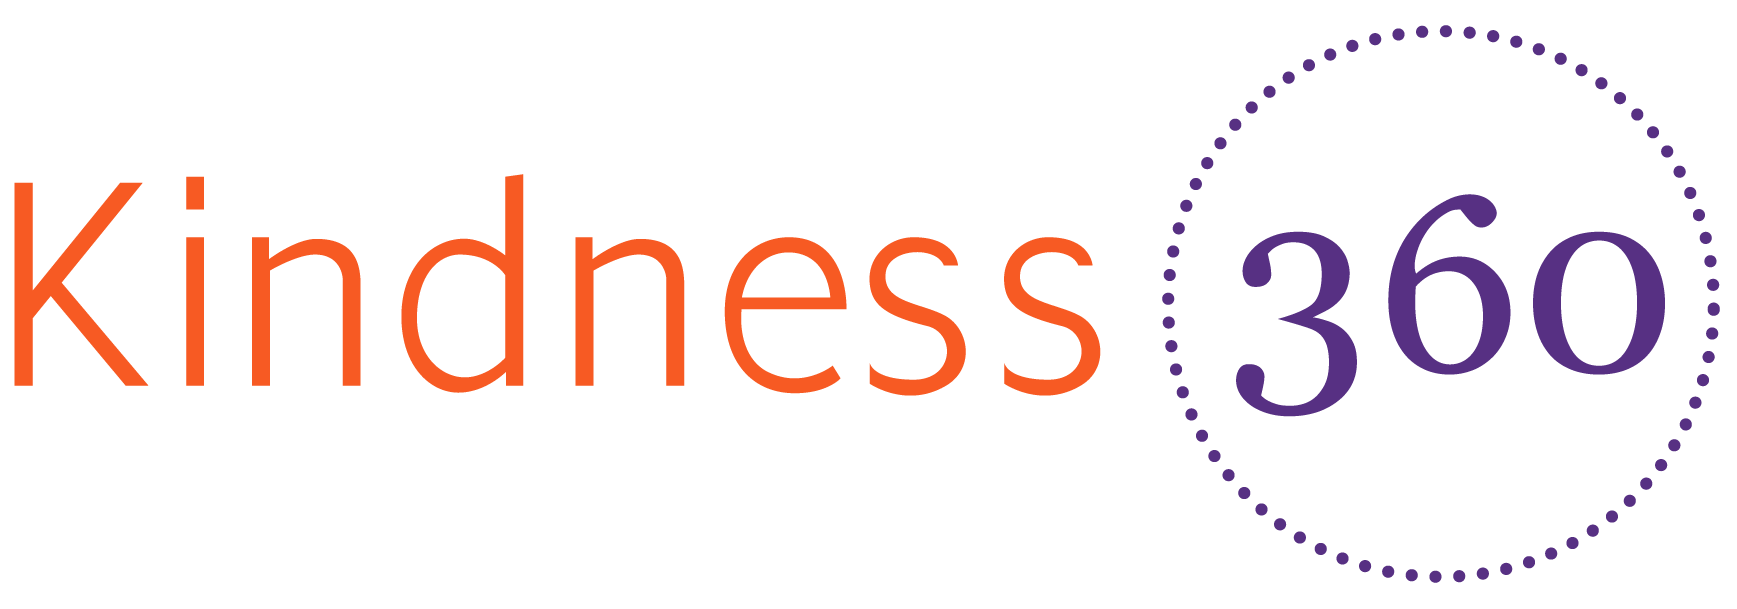 Kindness360 logo